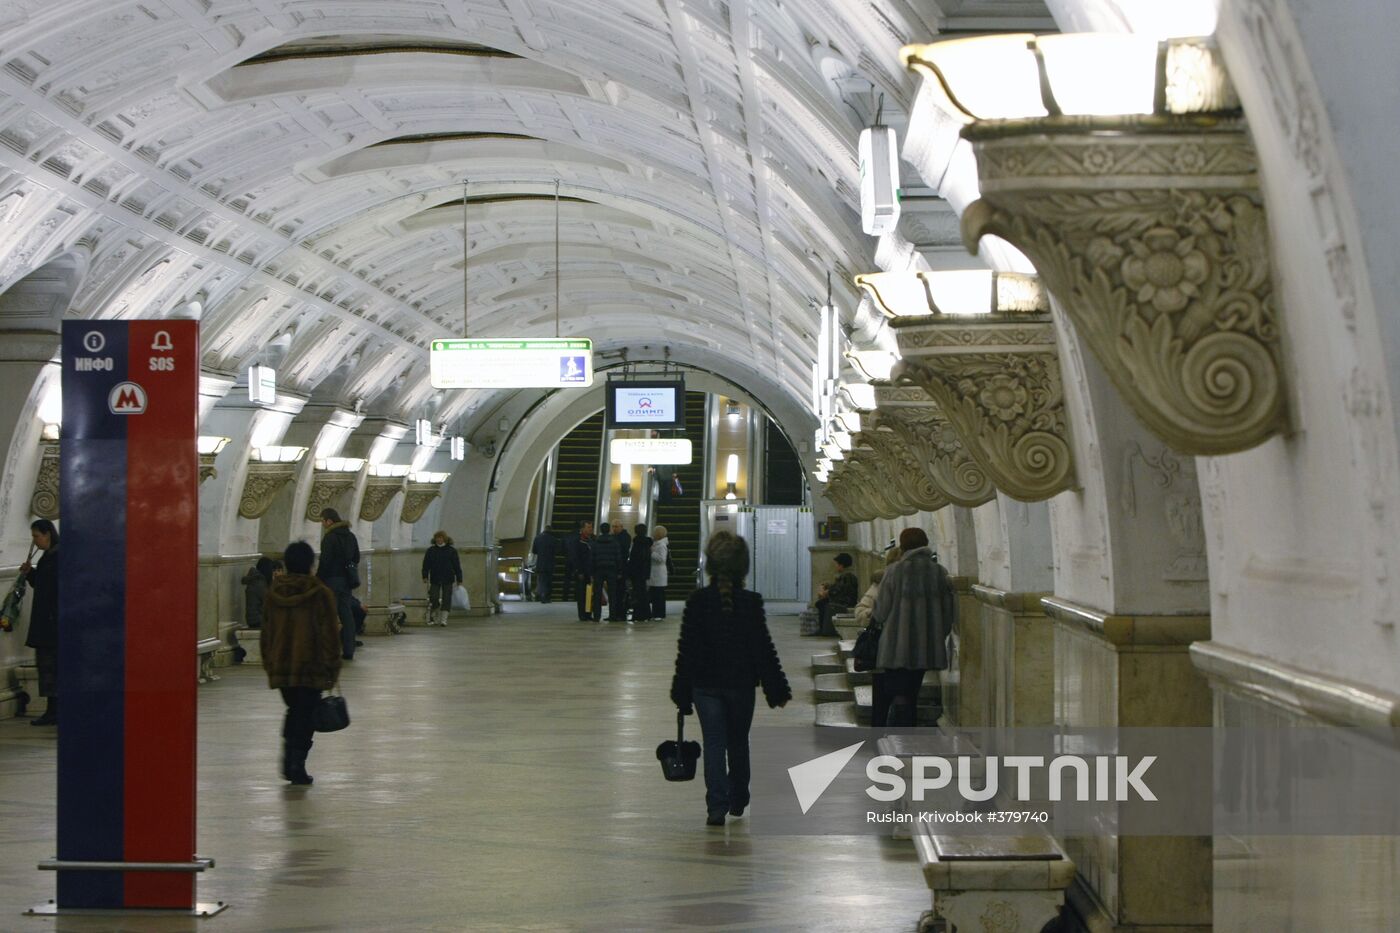 Belorusskaya station